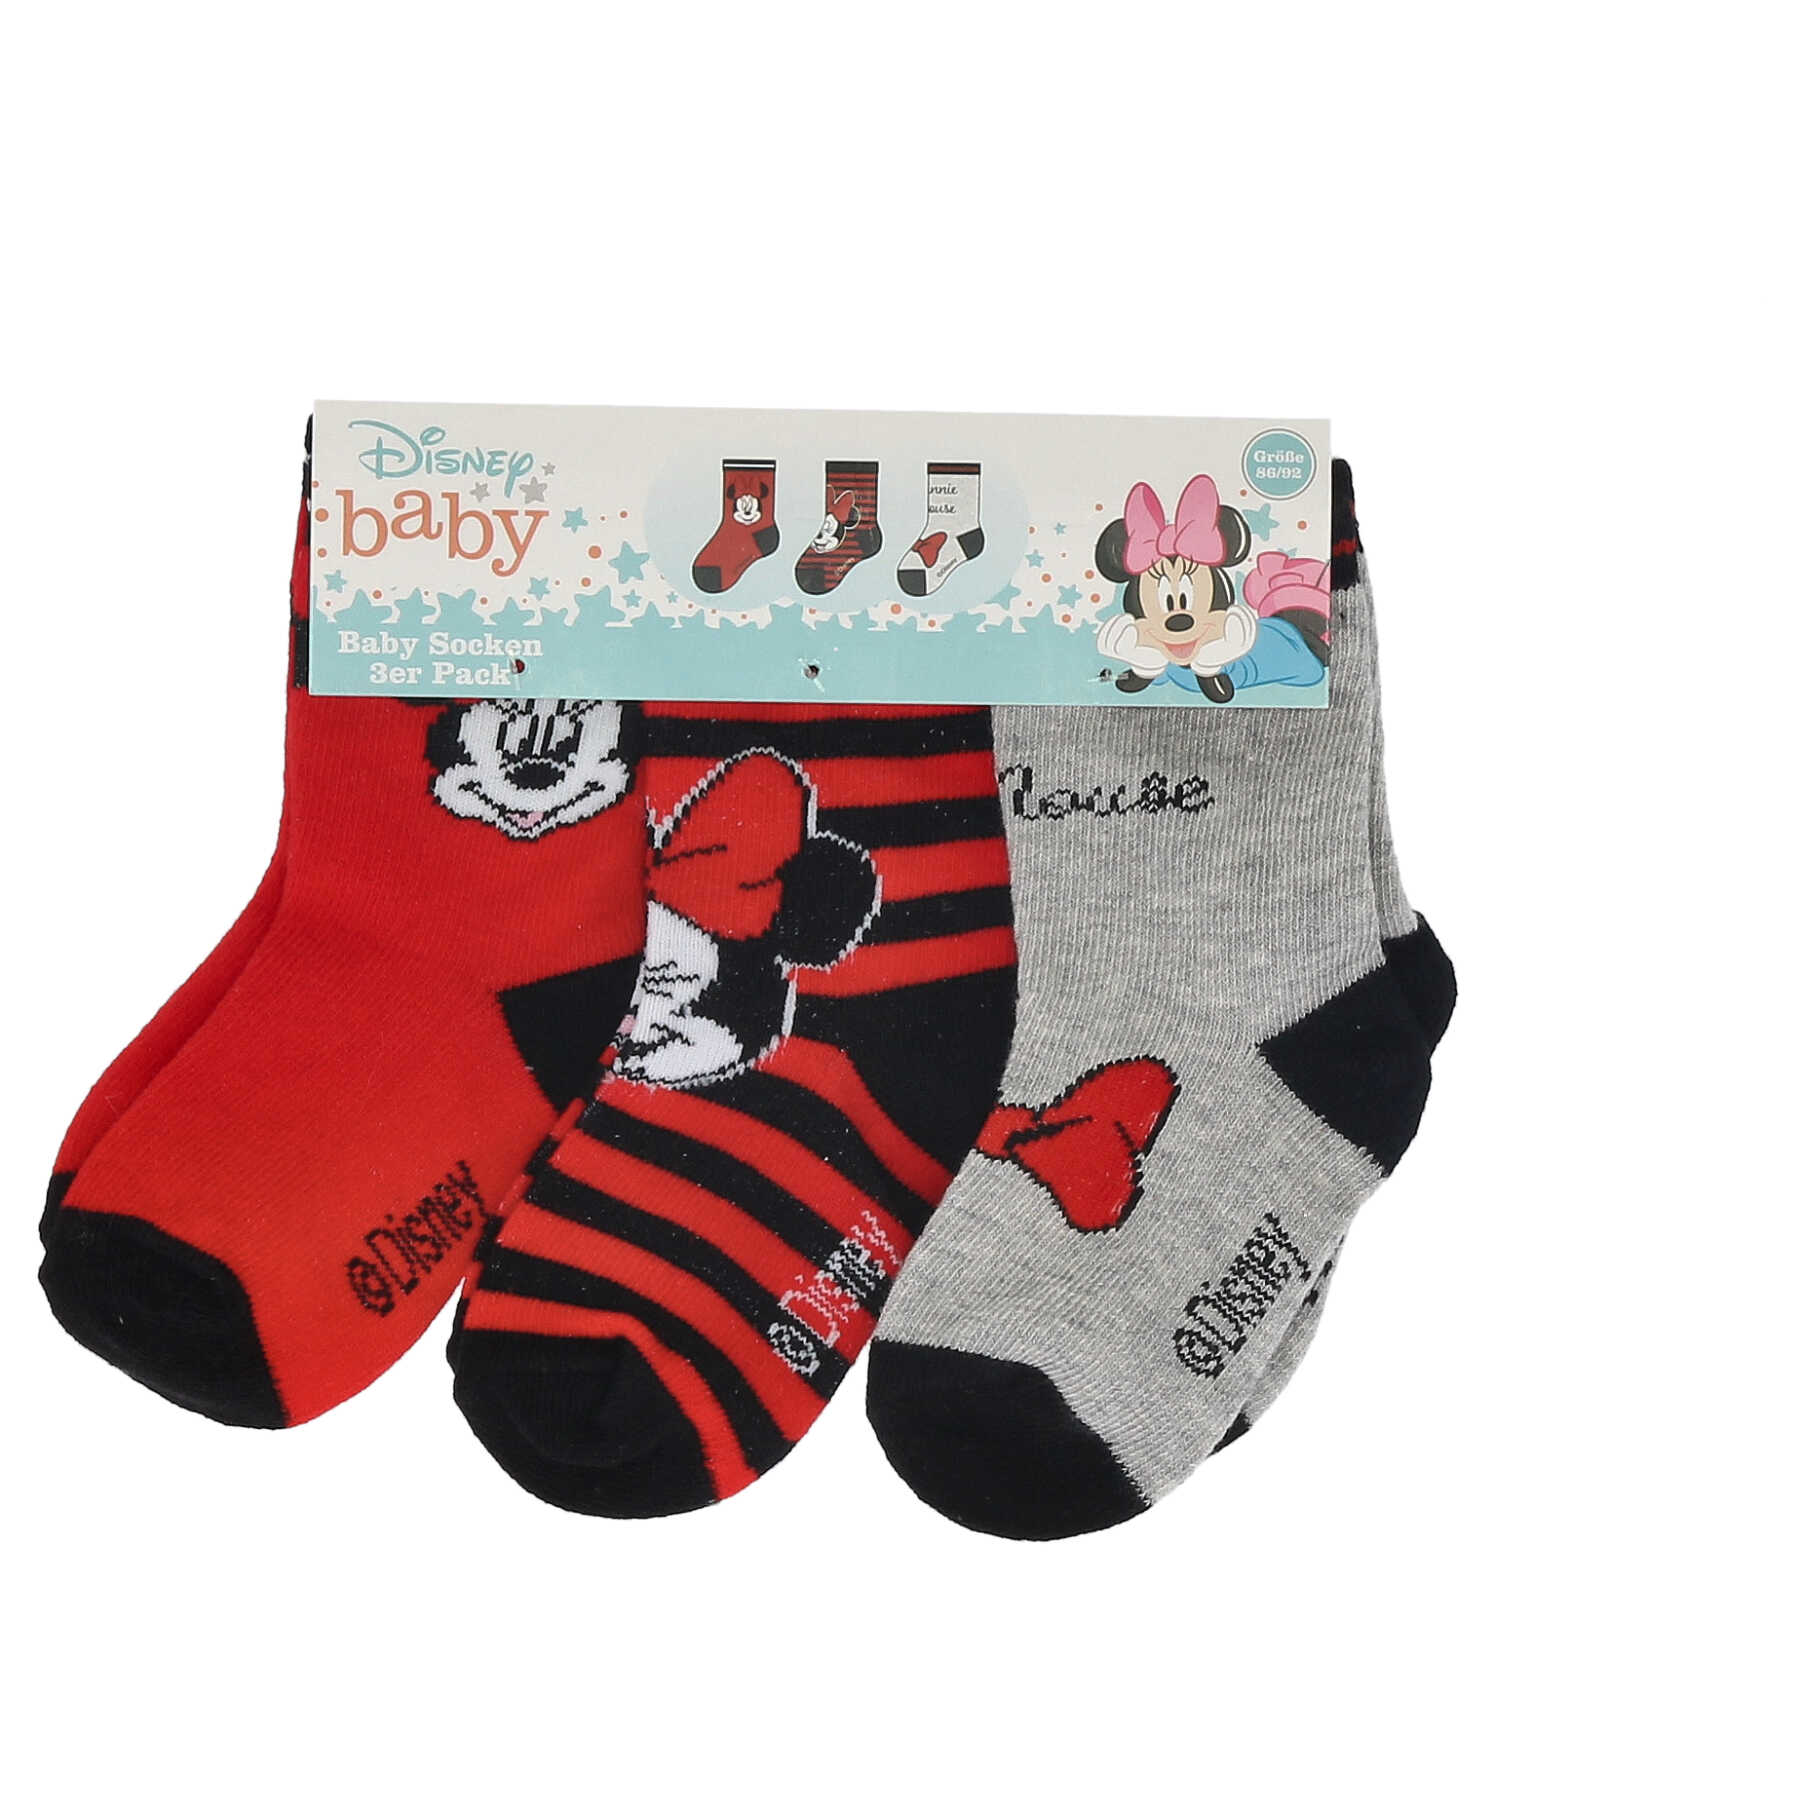 Kojenecké ponožky Minnie Baby - 3 páry